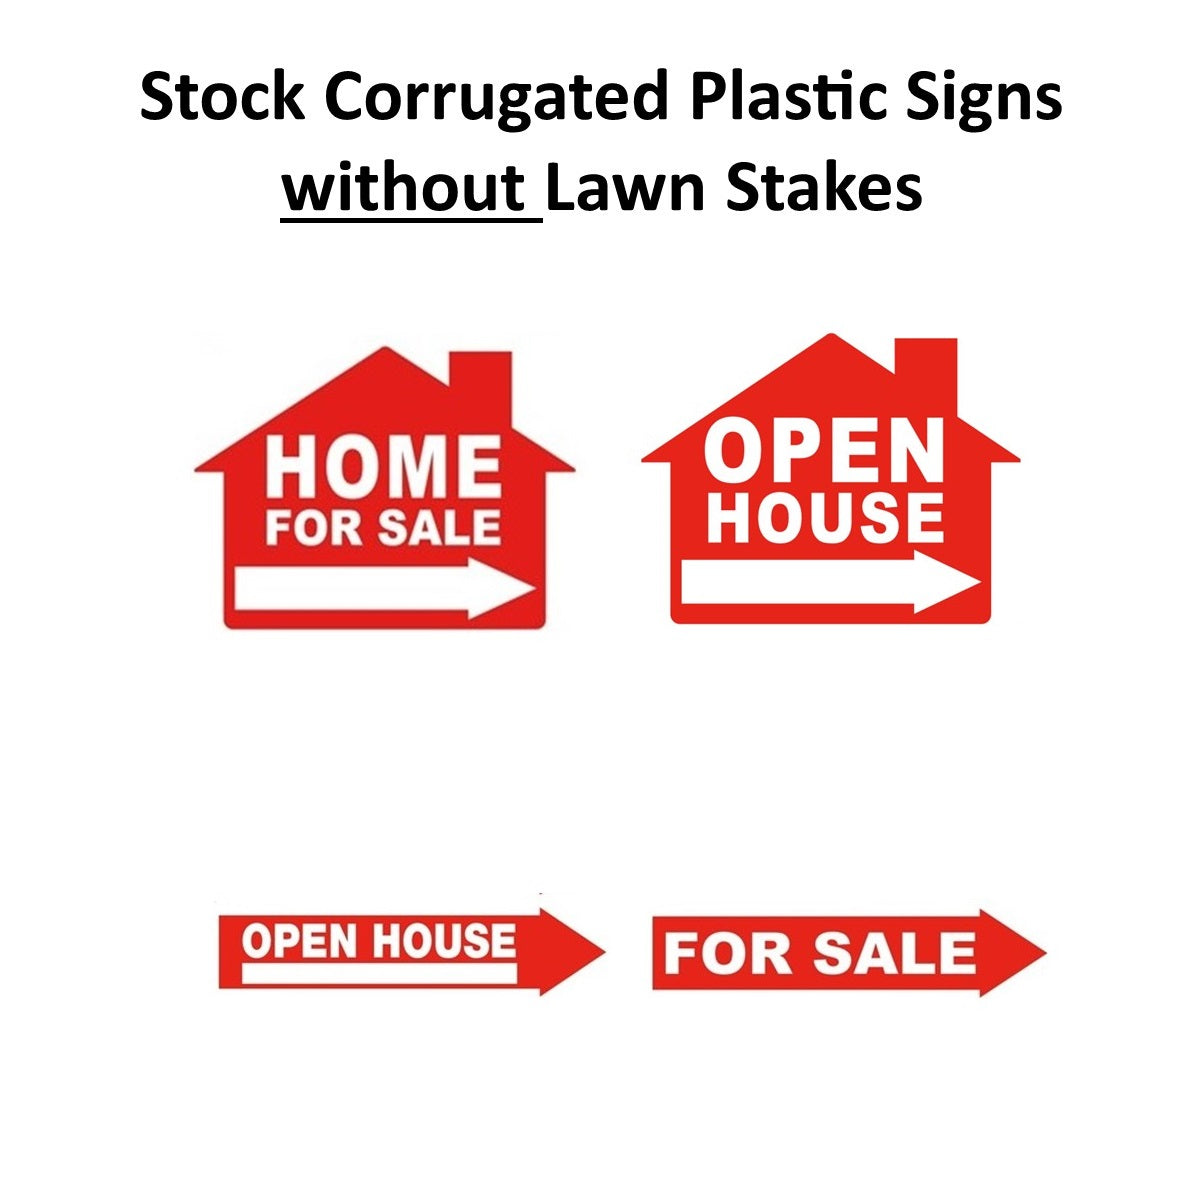 Stock Corrugated Plastic Signs